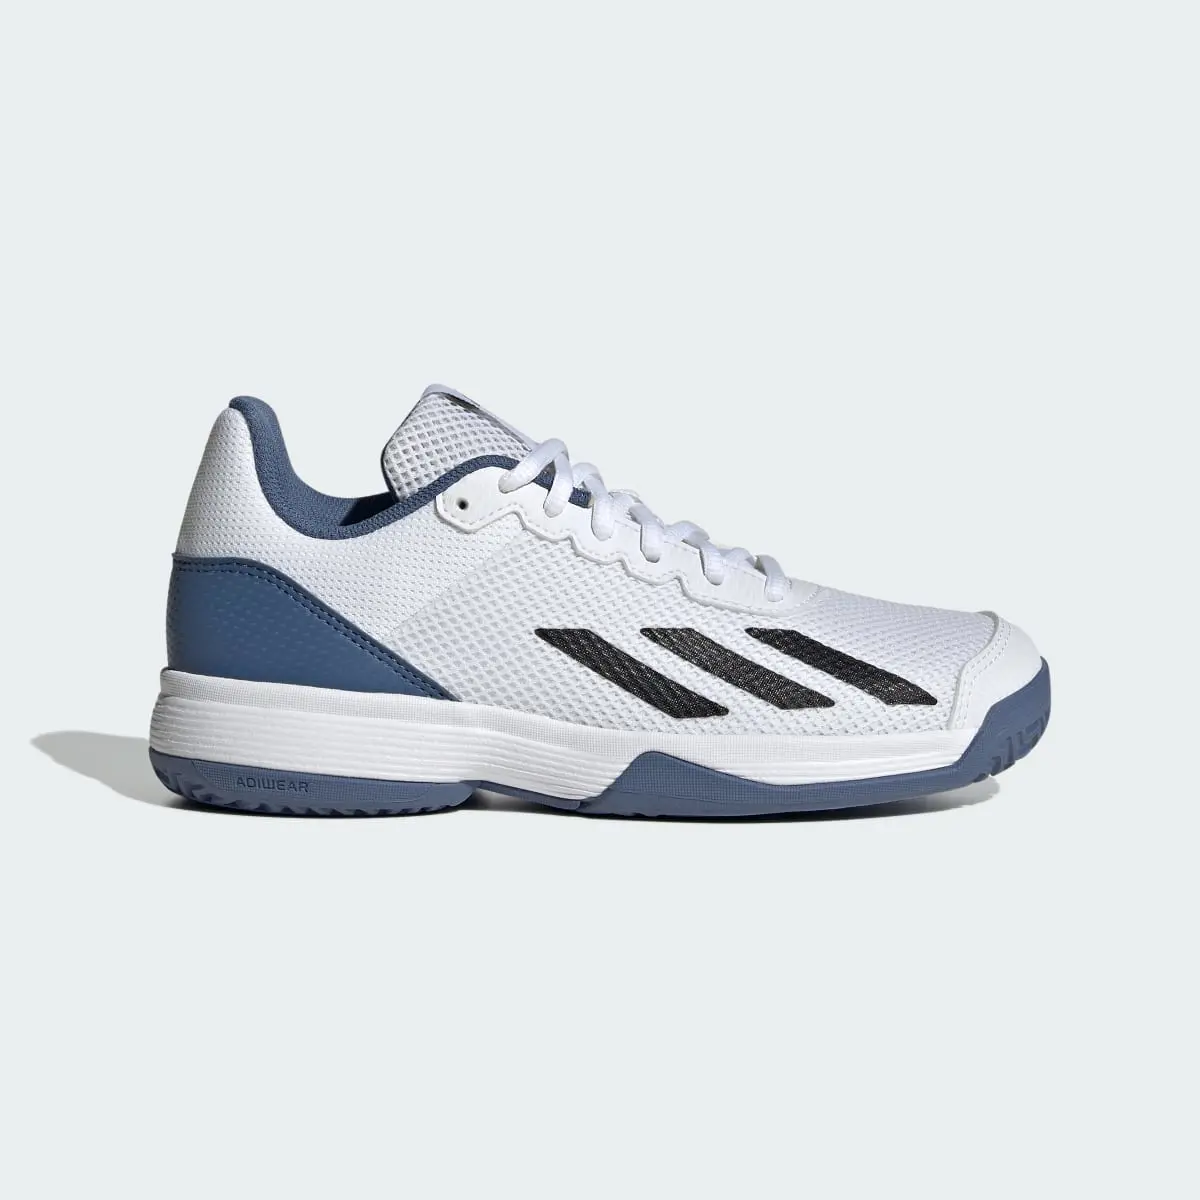 Adidas Courtflash Tennis Shoes. 2